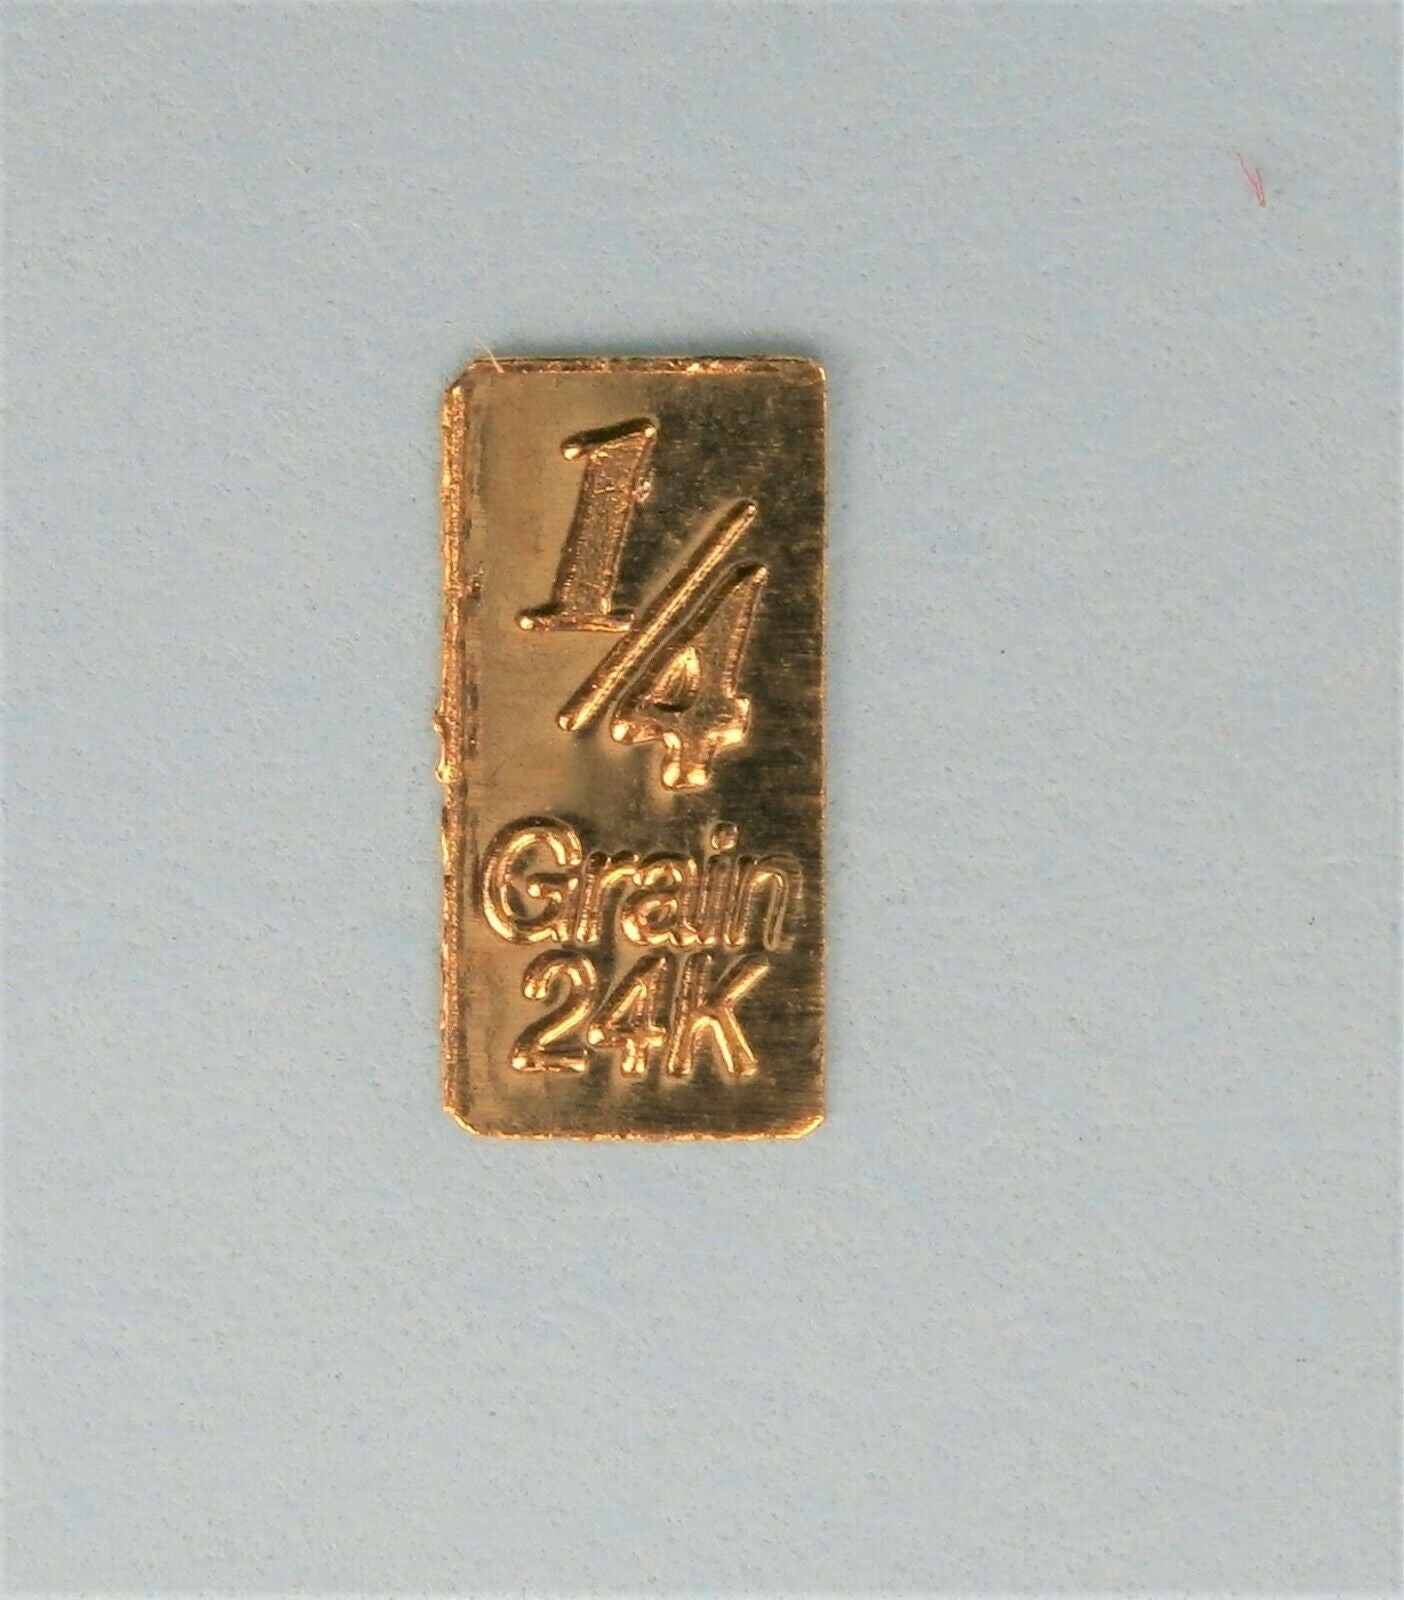 1/4 GRAIN .9999 FINE 24K GOLD BULLION BAR “FIRST RESPONDERS” - IN COA CARD